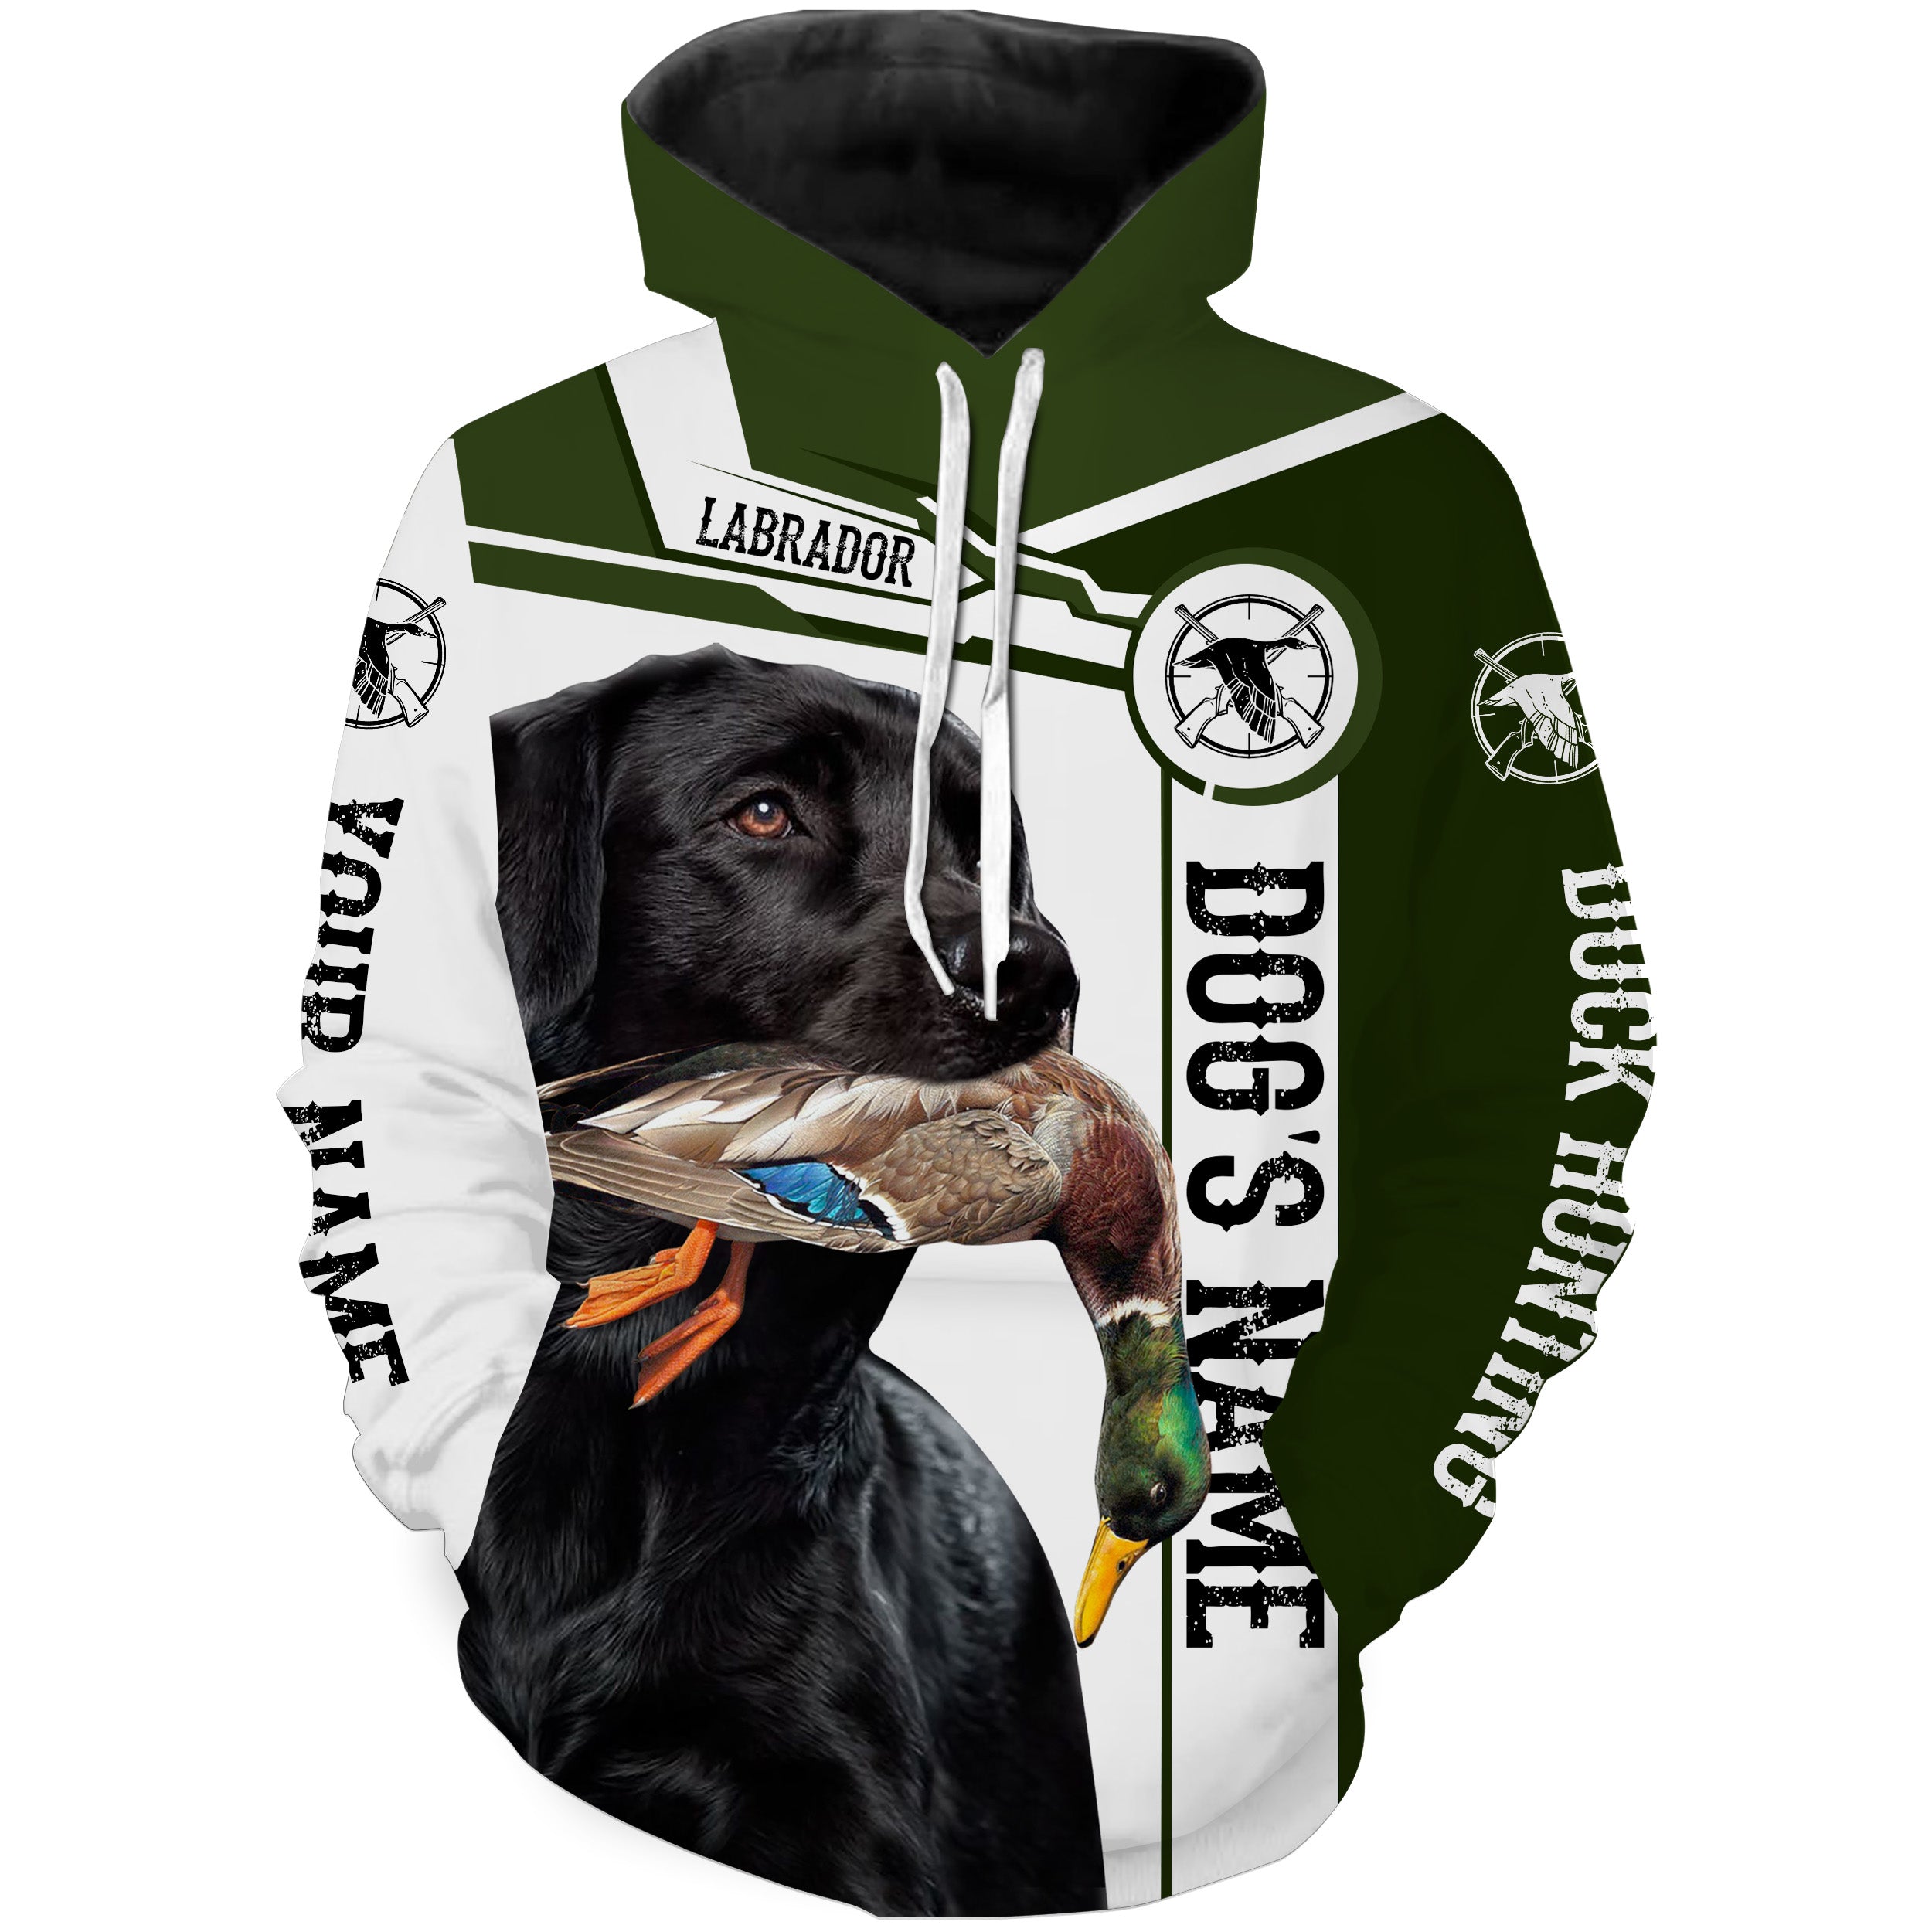 Black Lab Duck Hunting dog Custom name All over print Shirt, Labrador Retriever hunting dog – FSD3199